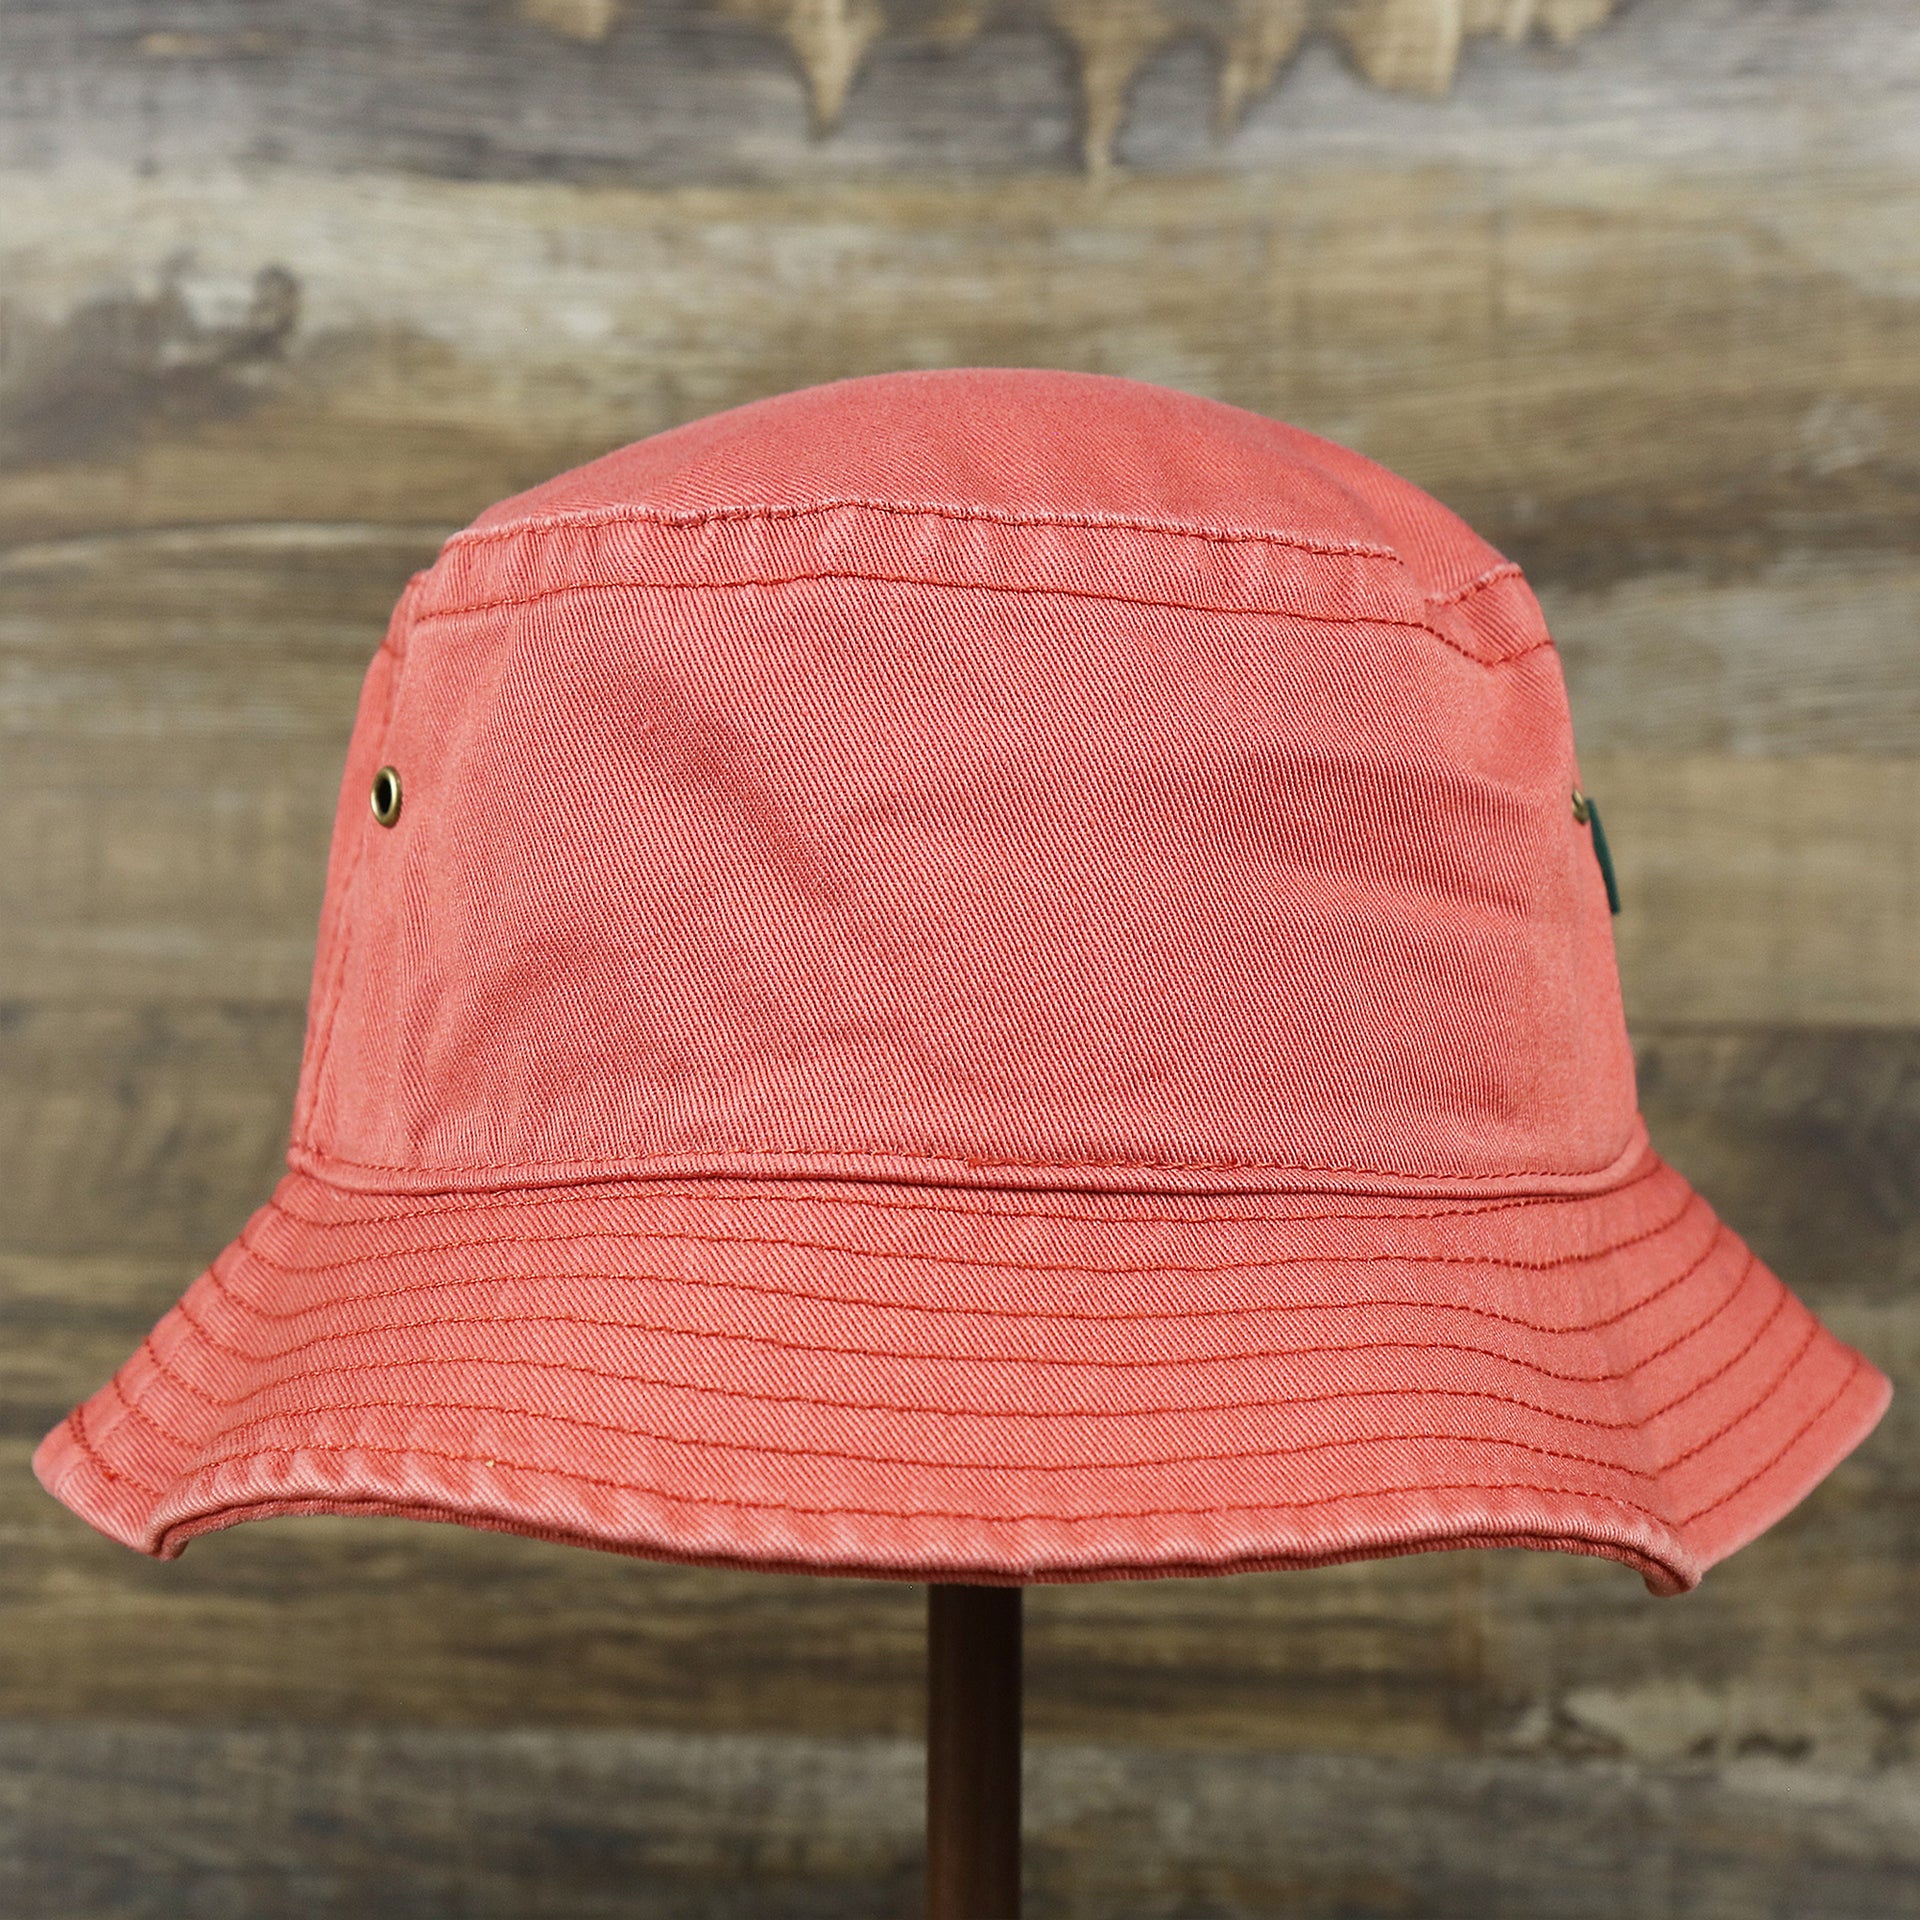 The backside of the White OCNJ Double Wordmark Navy Blue Outline Bucket Hat | Nantucket Red Bucket Hat